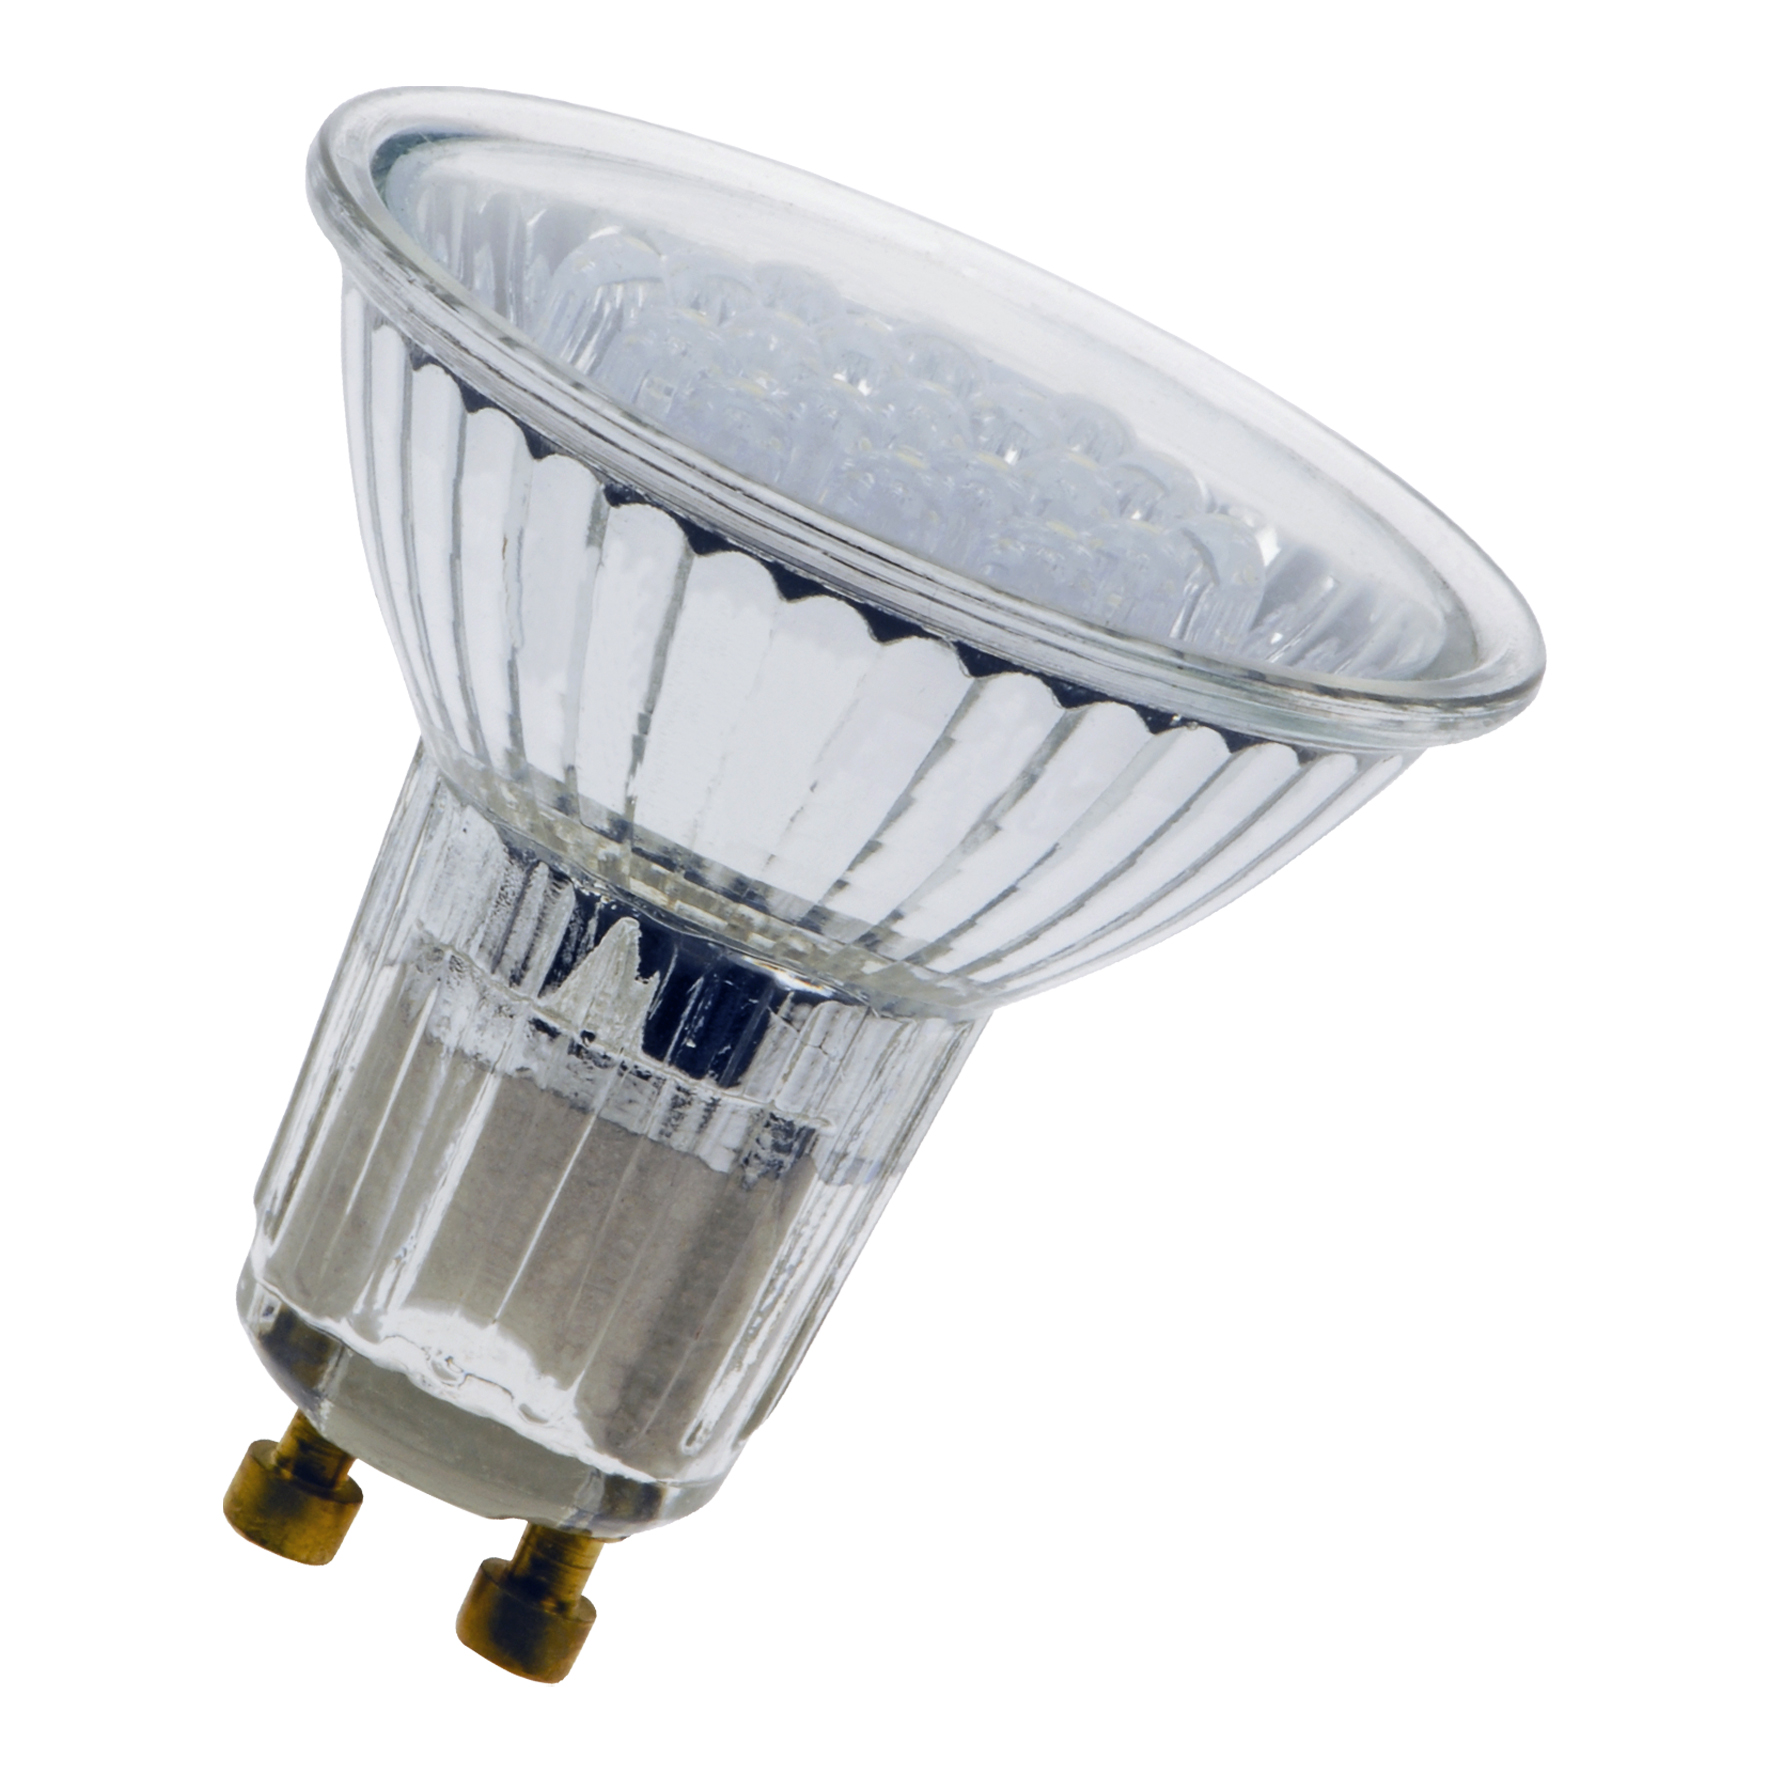 08714681295694 - Lampe LED - Lampes - e-Bailey